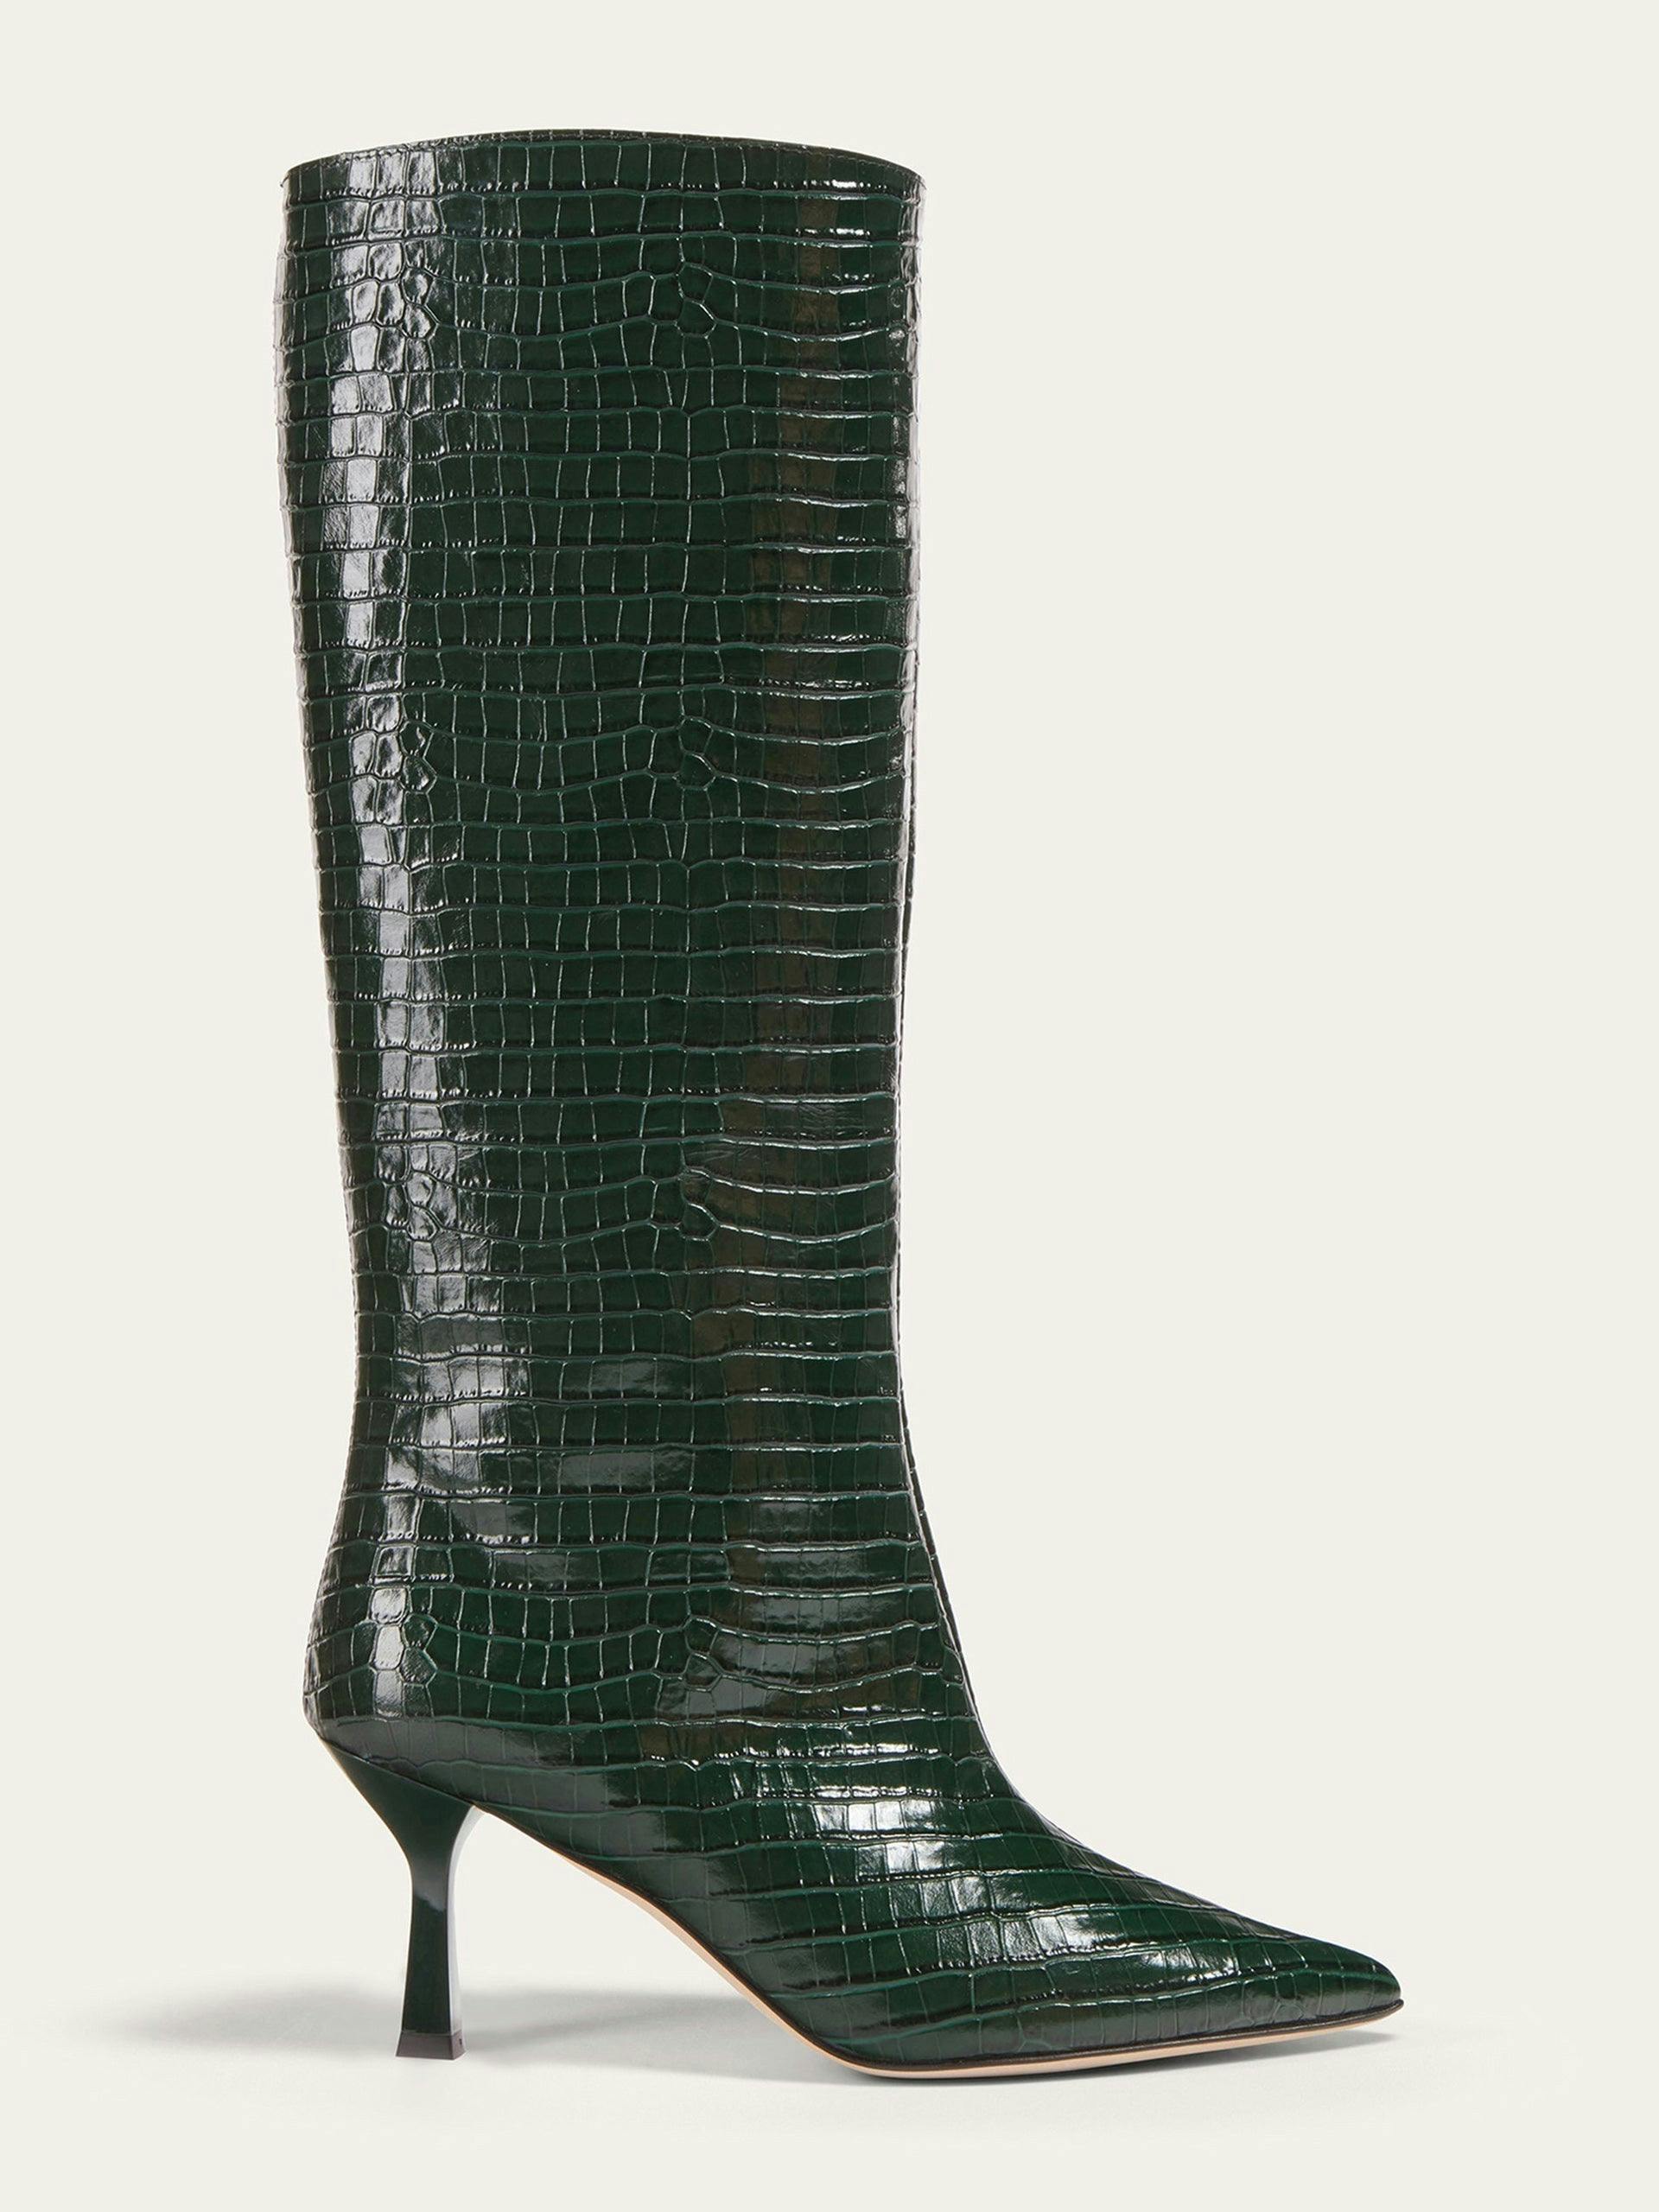 Ana green croc boot